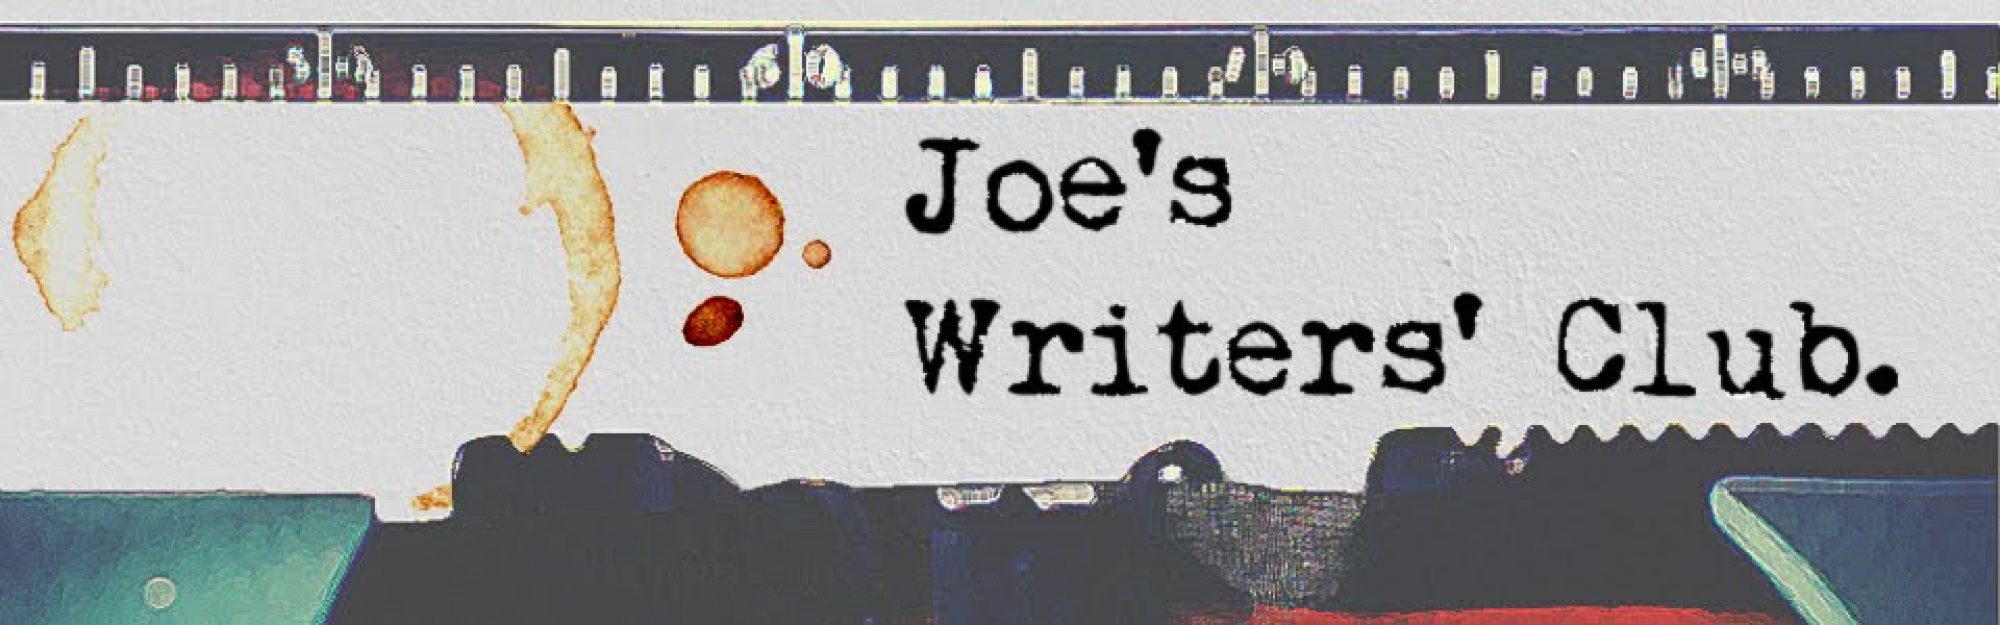 Joes blog banner -coffee 960px